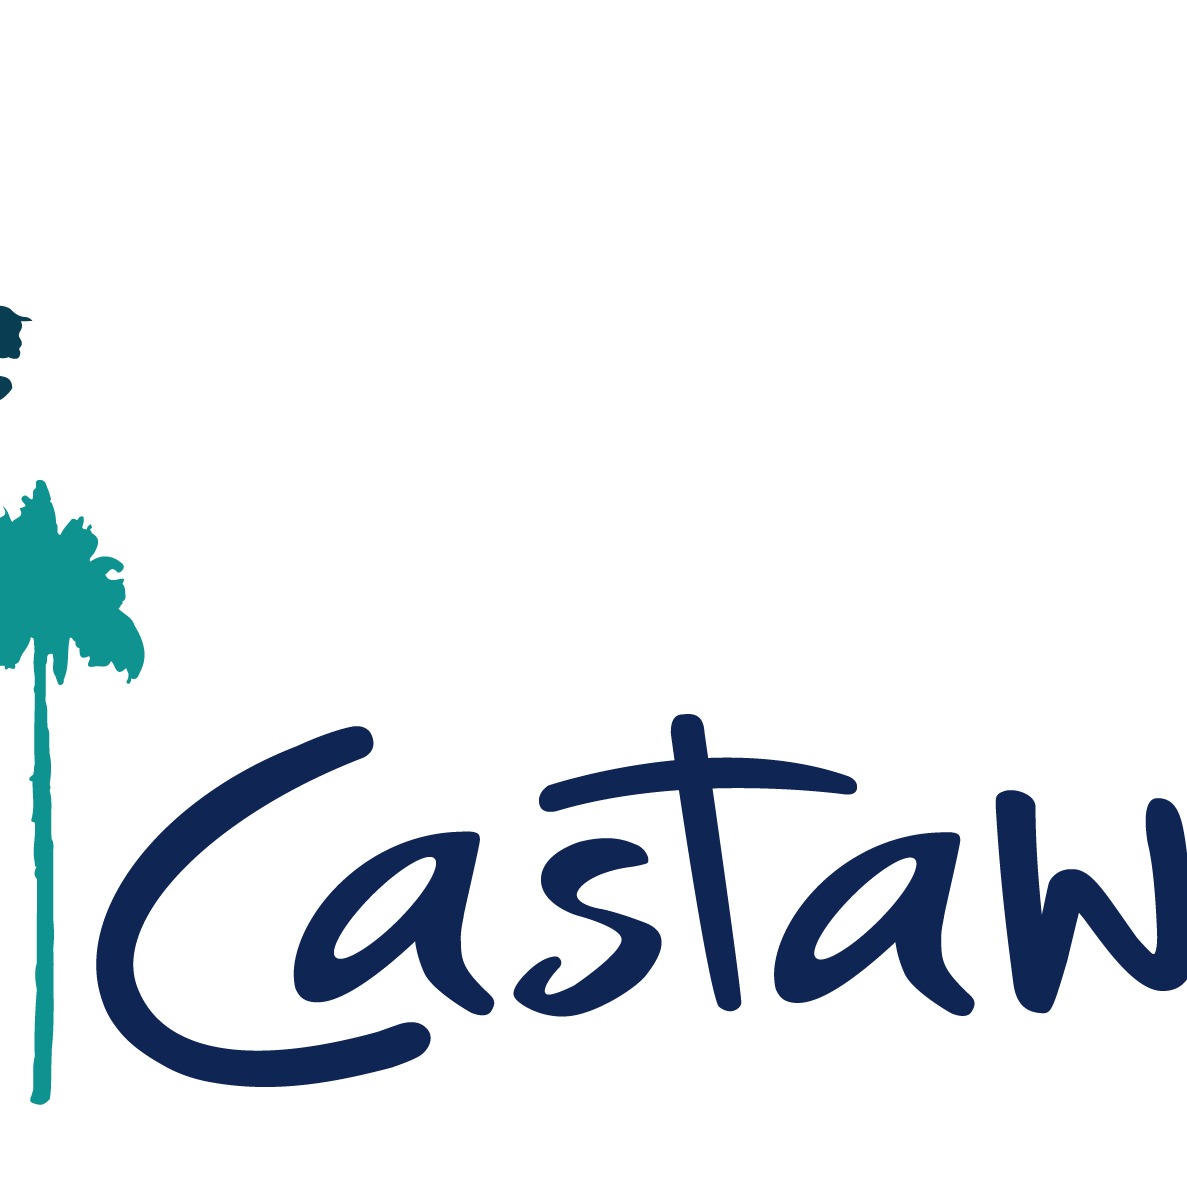 Castaway Restaurant & Events Logo